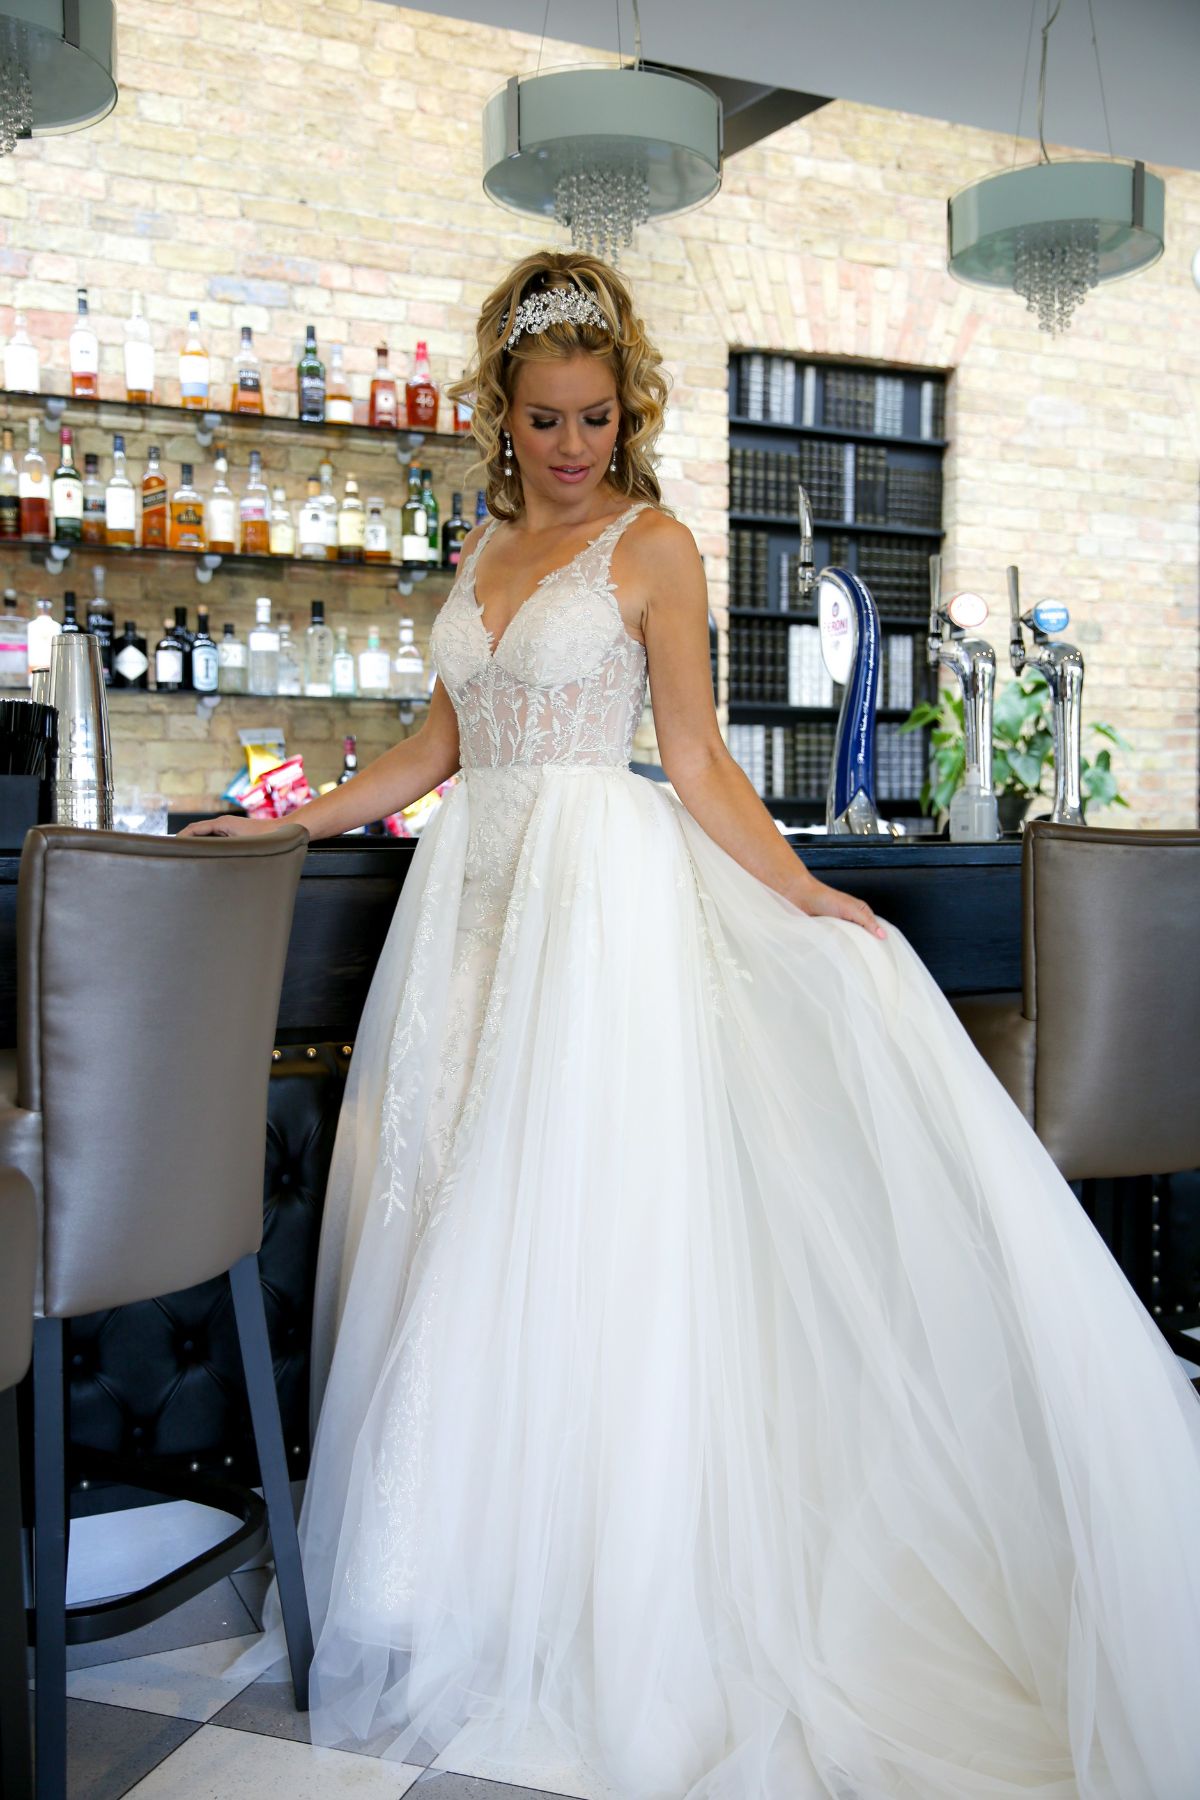 Best Dress 2 Impress Bridal-Image-75